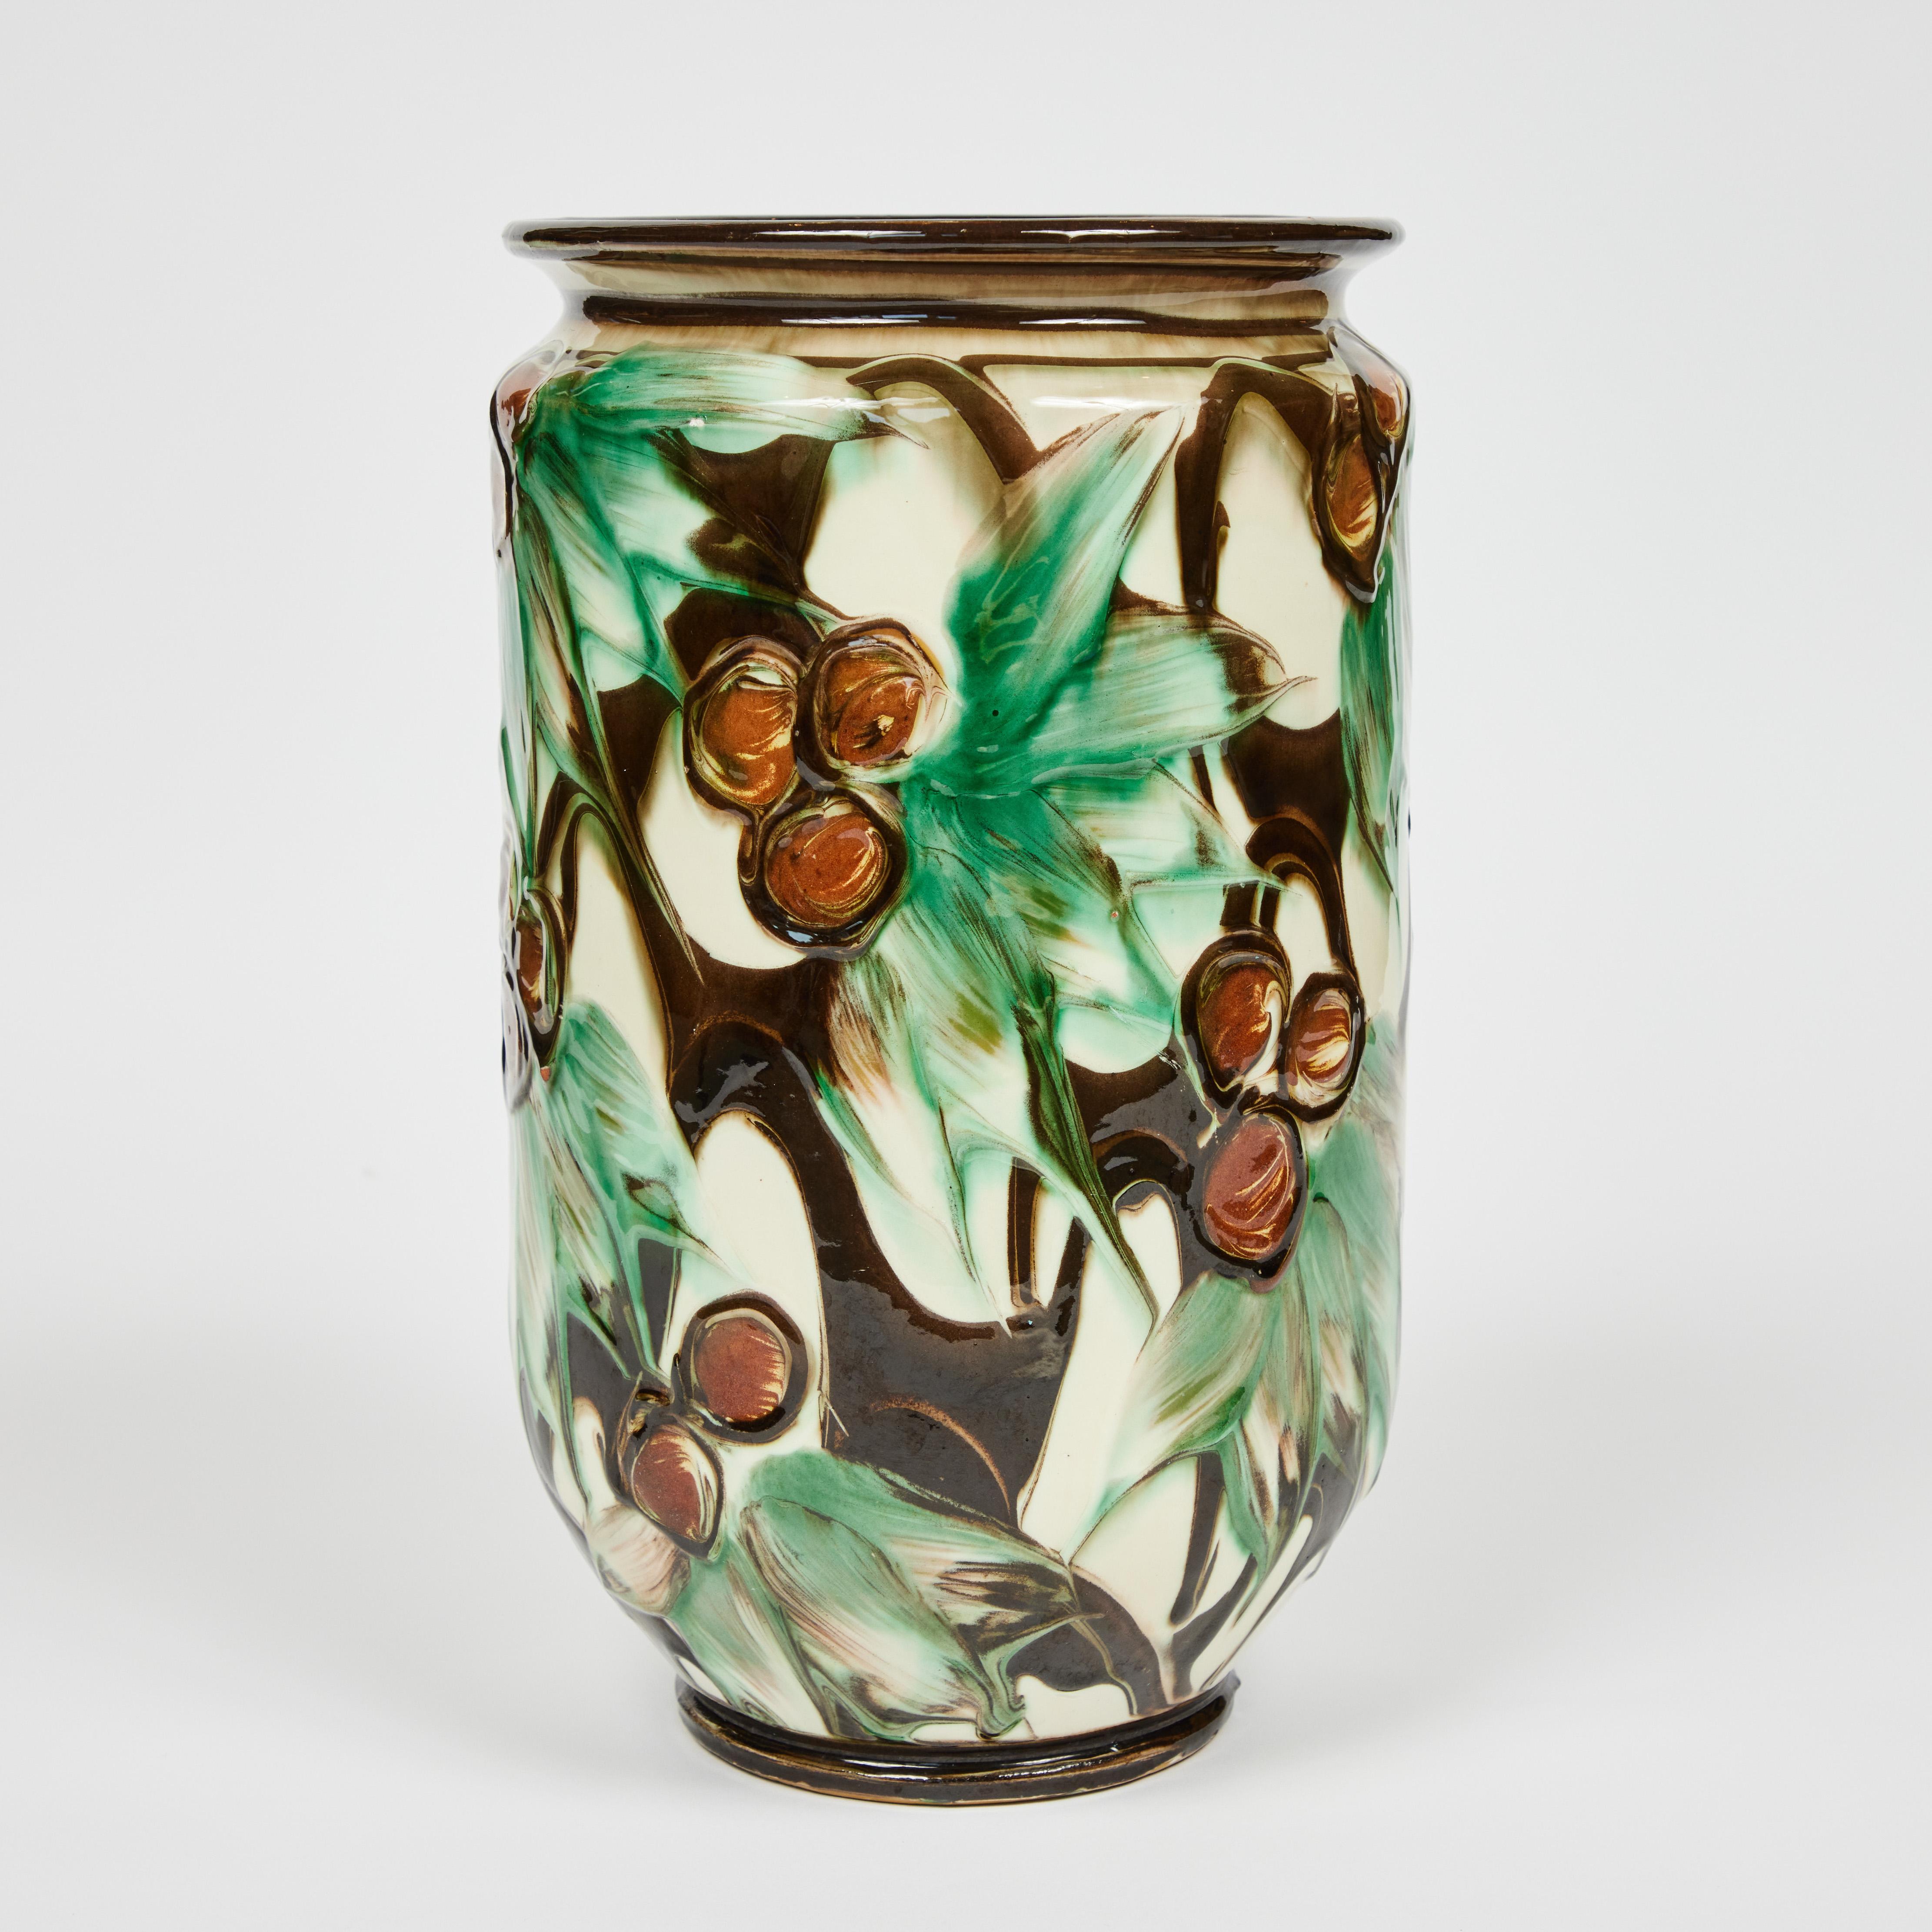 Herman Kahler HAK Denmark

Slight abstract pattern of leaves + berries in a green, brown and cream glaze.